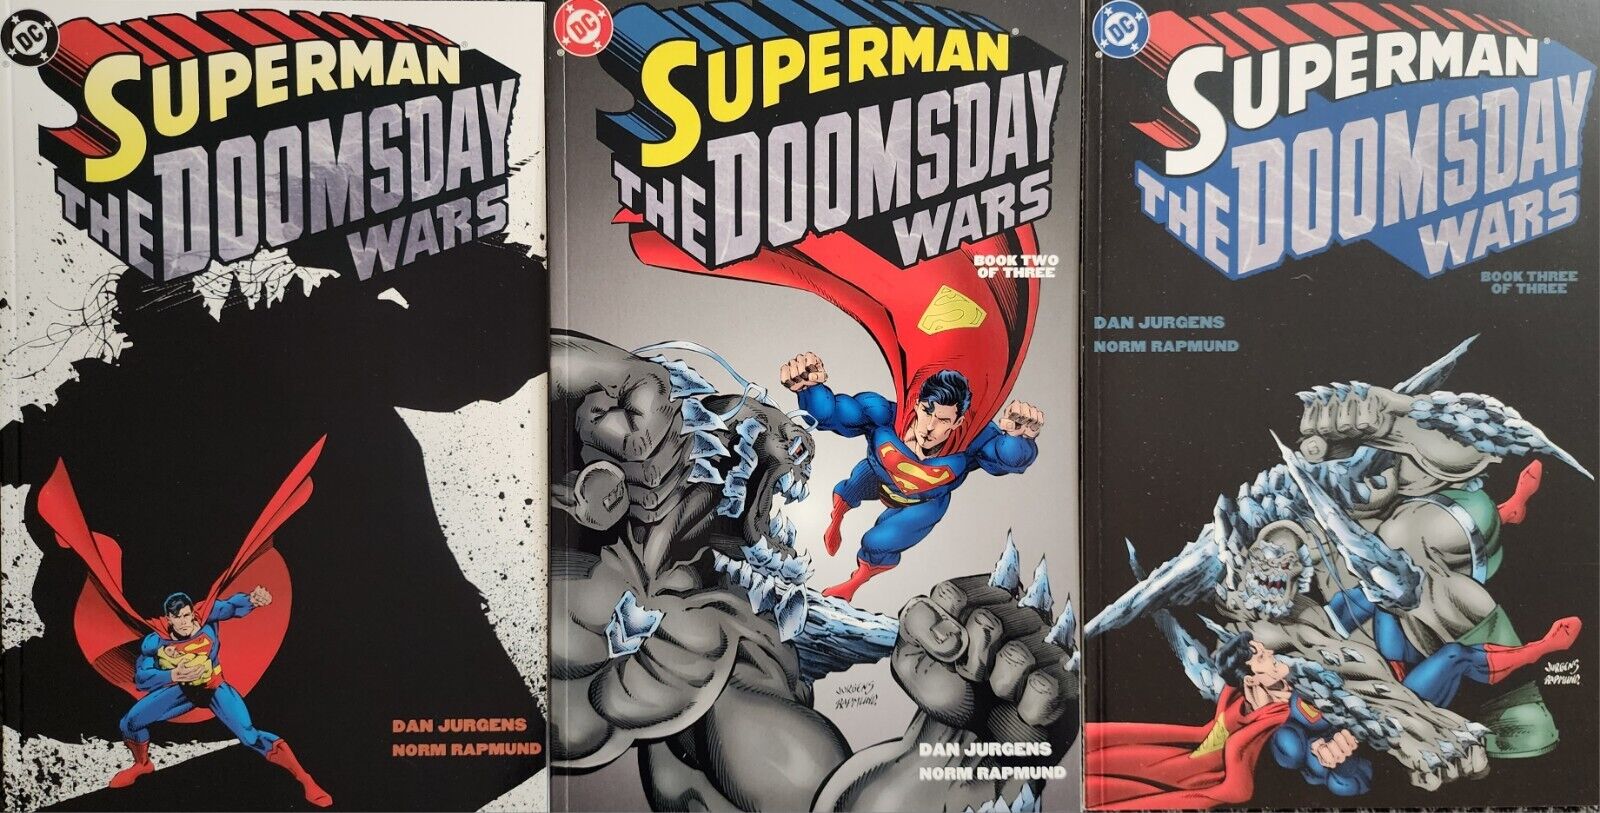 Superman The Doomsday Wars #1 2 3 DC Comic Book Set 1998 KEY Jurgens Rapmund